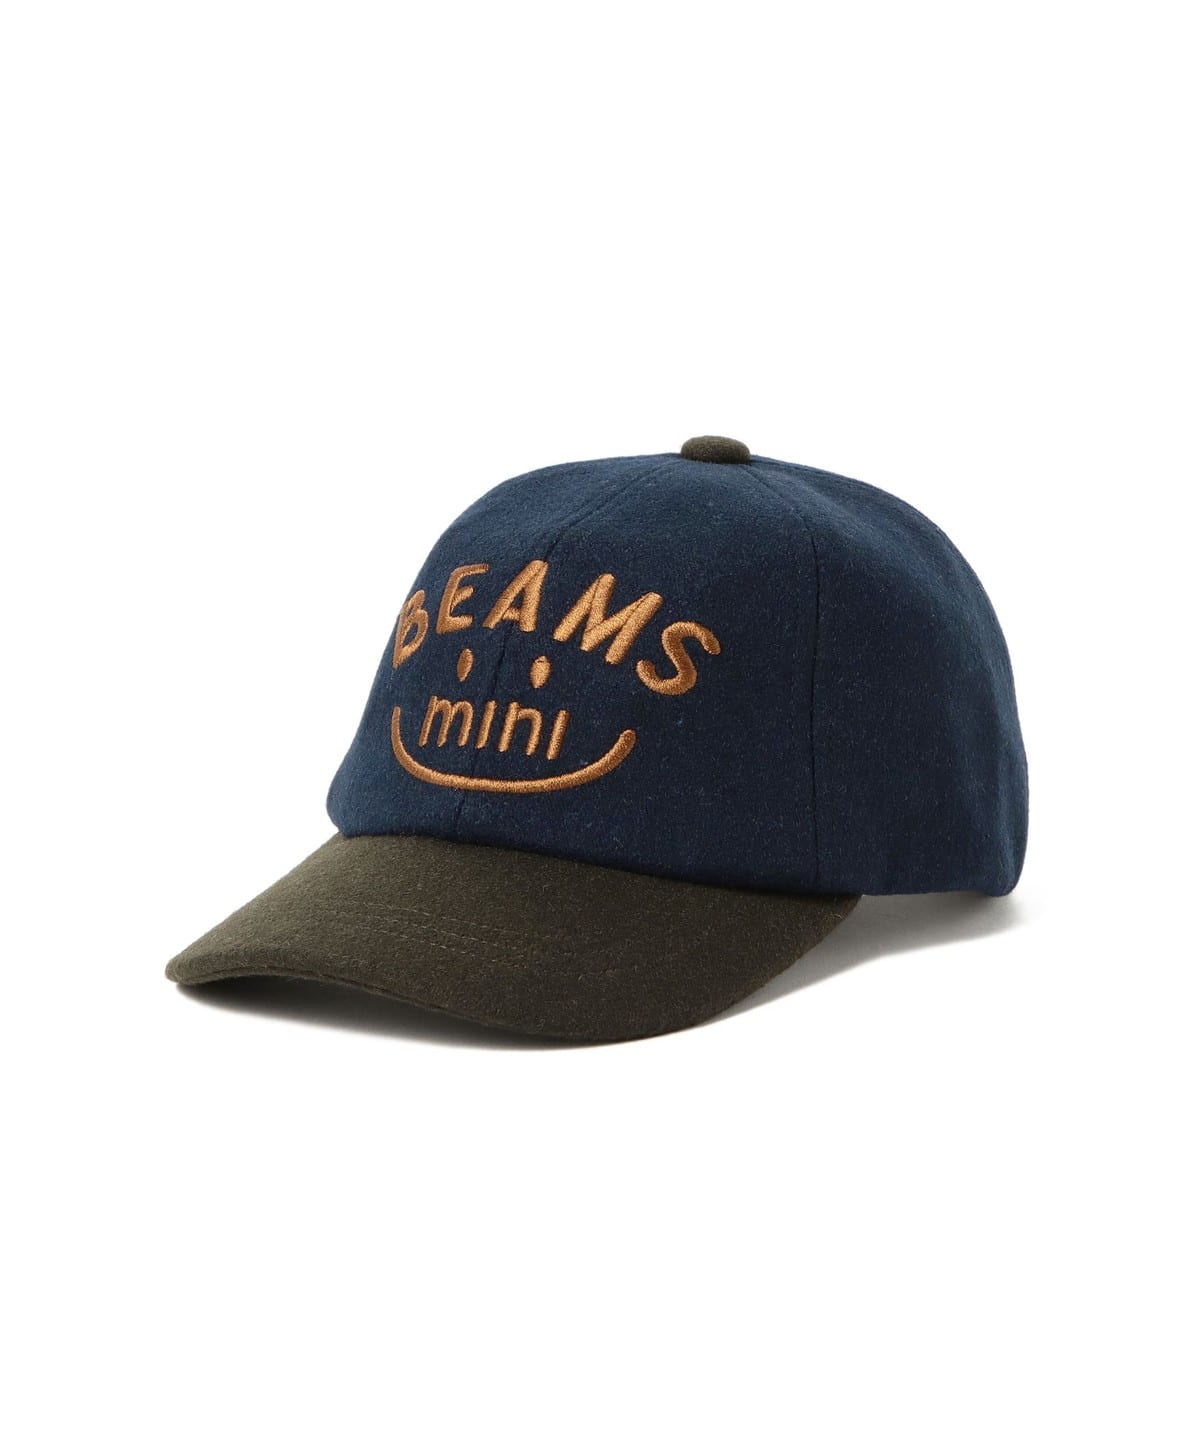 BEAMS mini BEAMS mini Outlet] BEAMS mini / smile cap (hat cap 